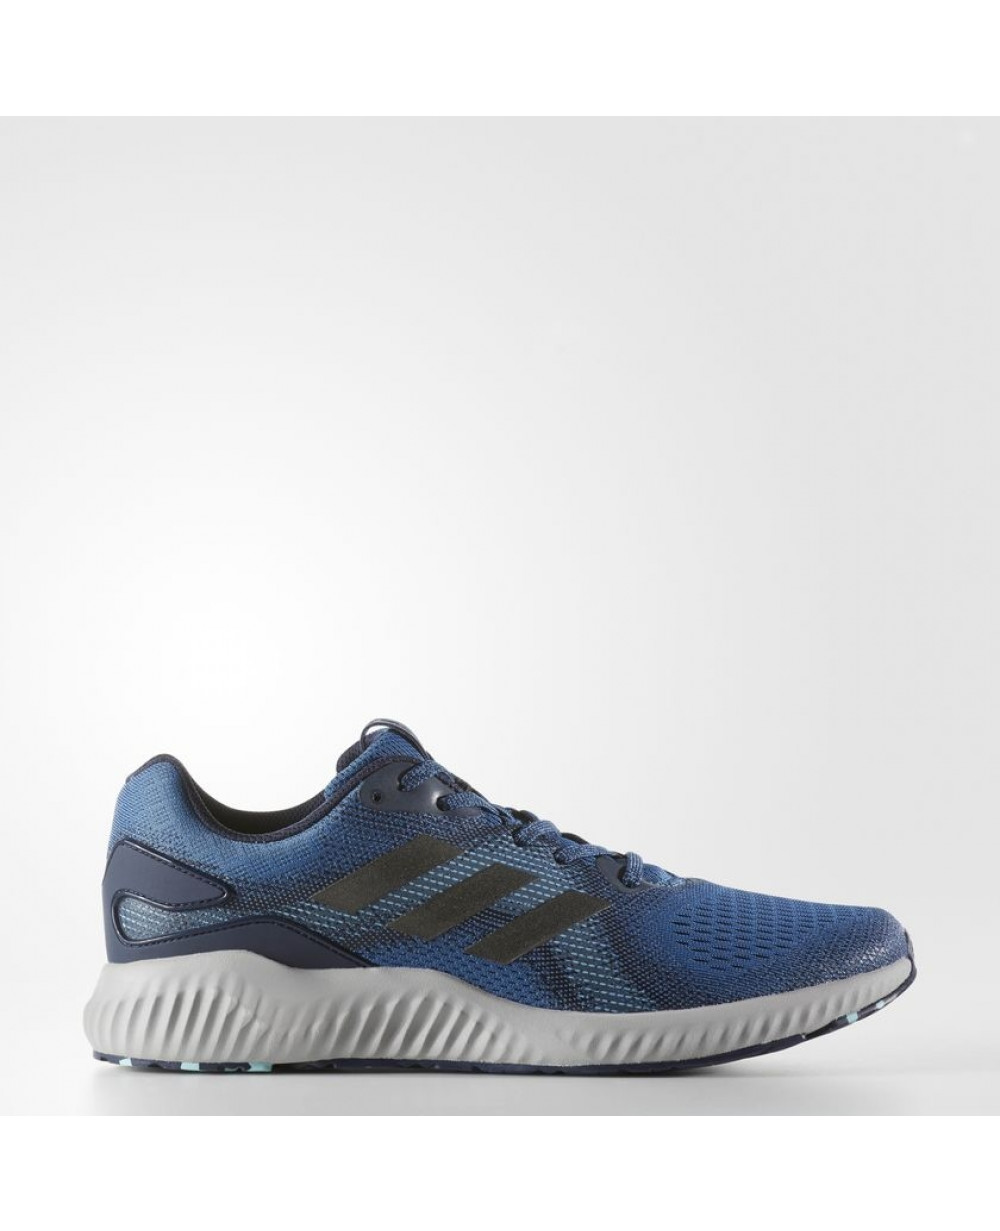 Adidas Aerobounce St Running Shoes For Men Bw0309